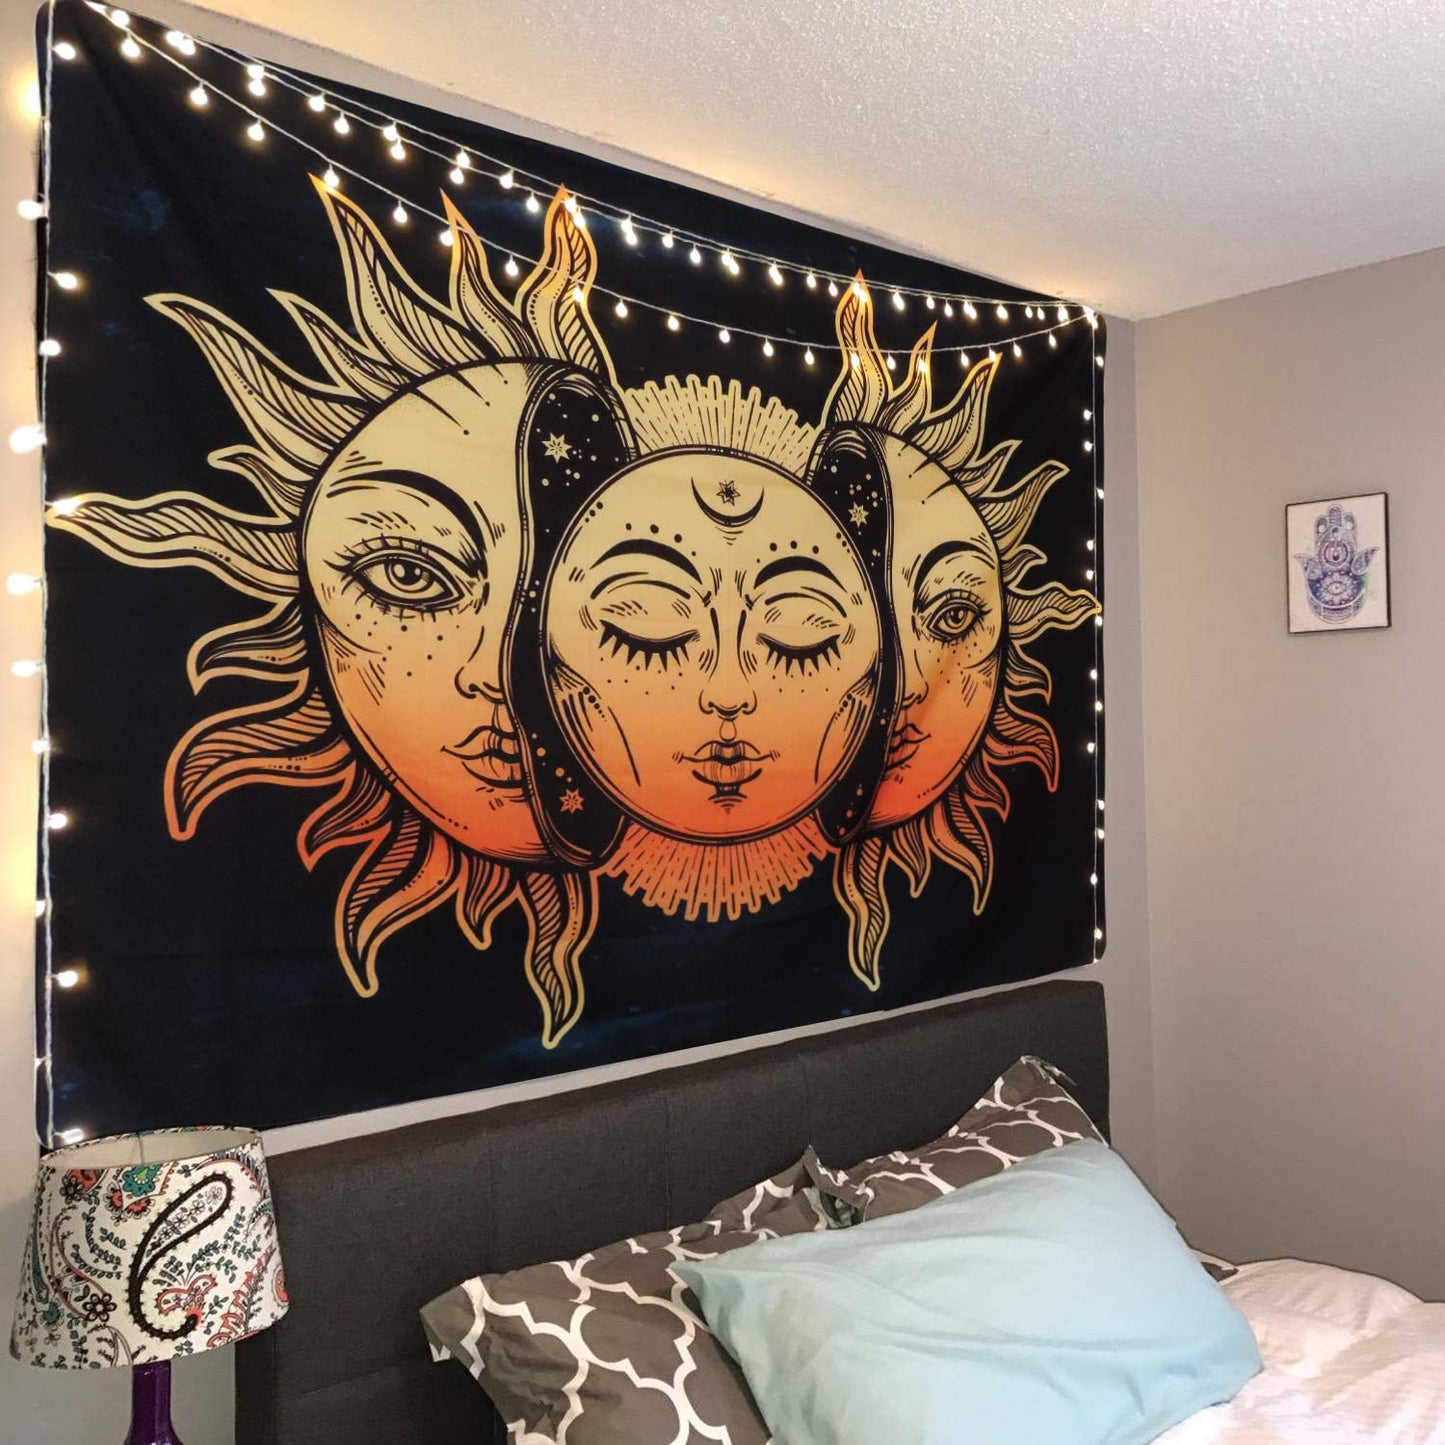 Sunmoonella - Enter the Moon & Sun Celestial Tapestry